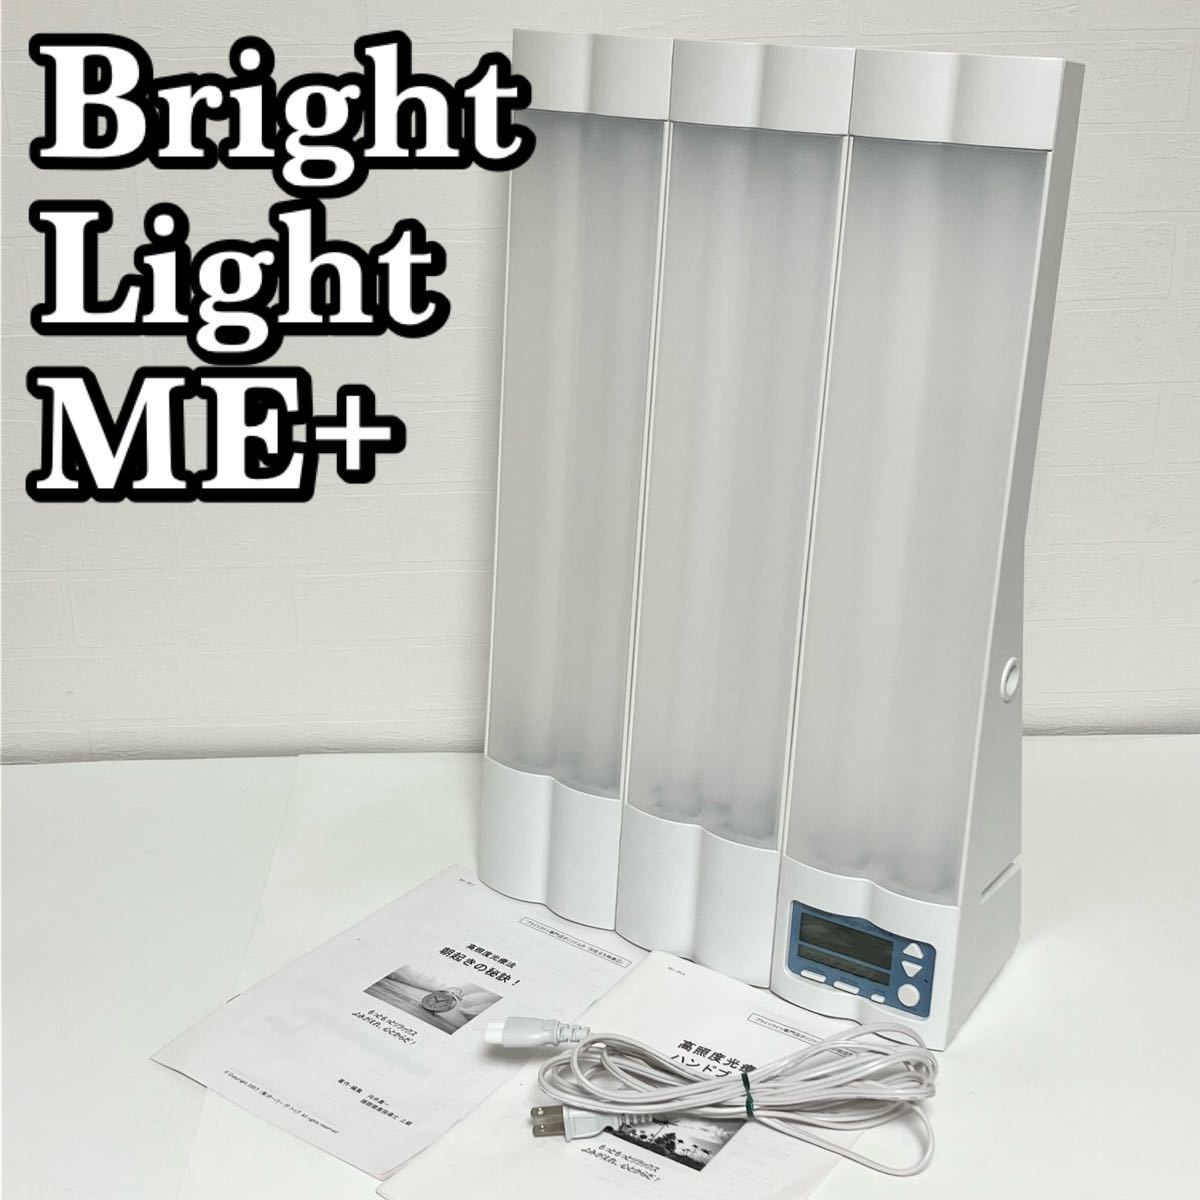 Bright Light me＋ ブライトライトMEプラス solartone 【コンビニ受取